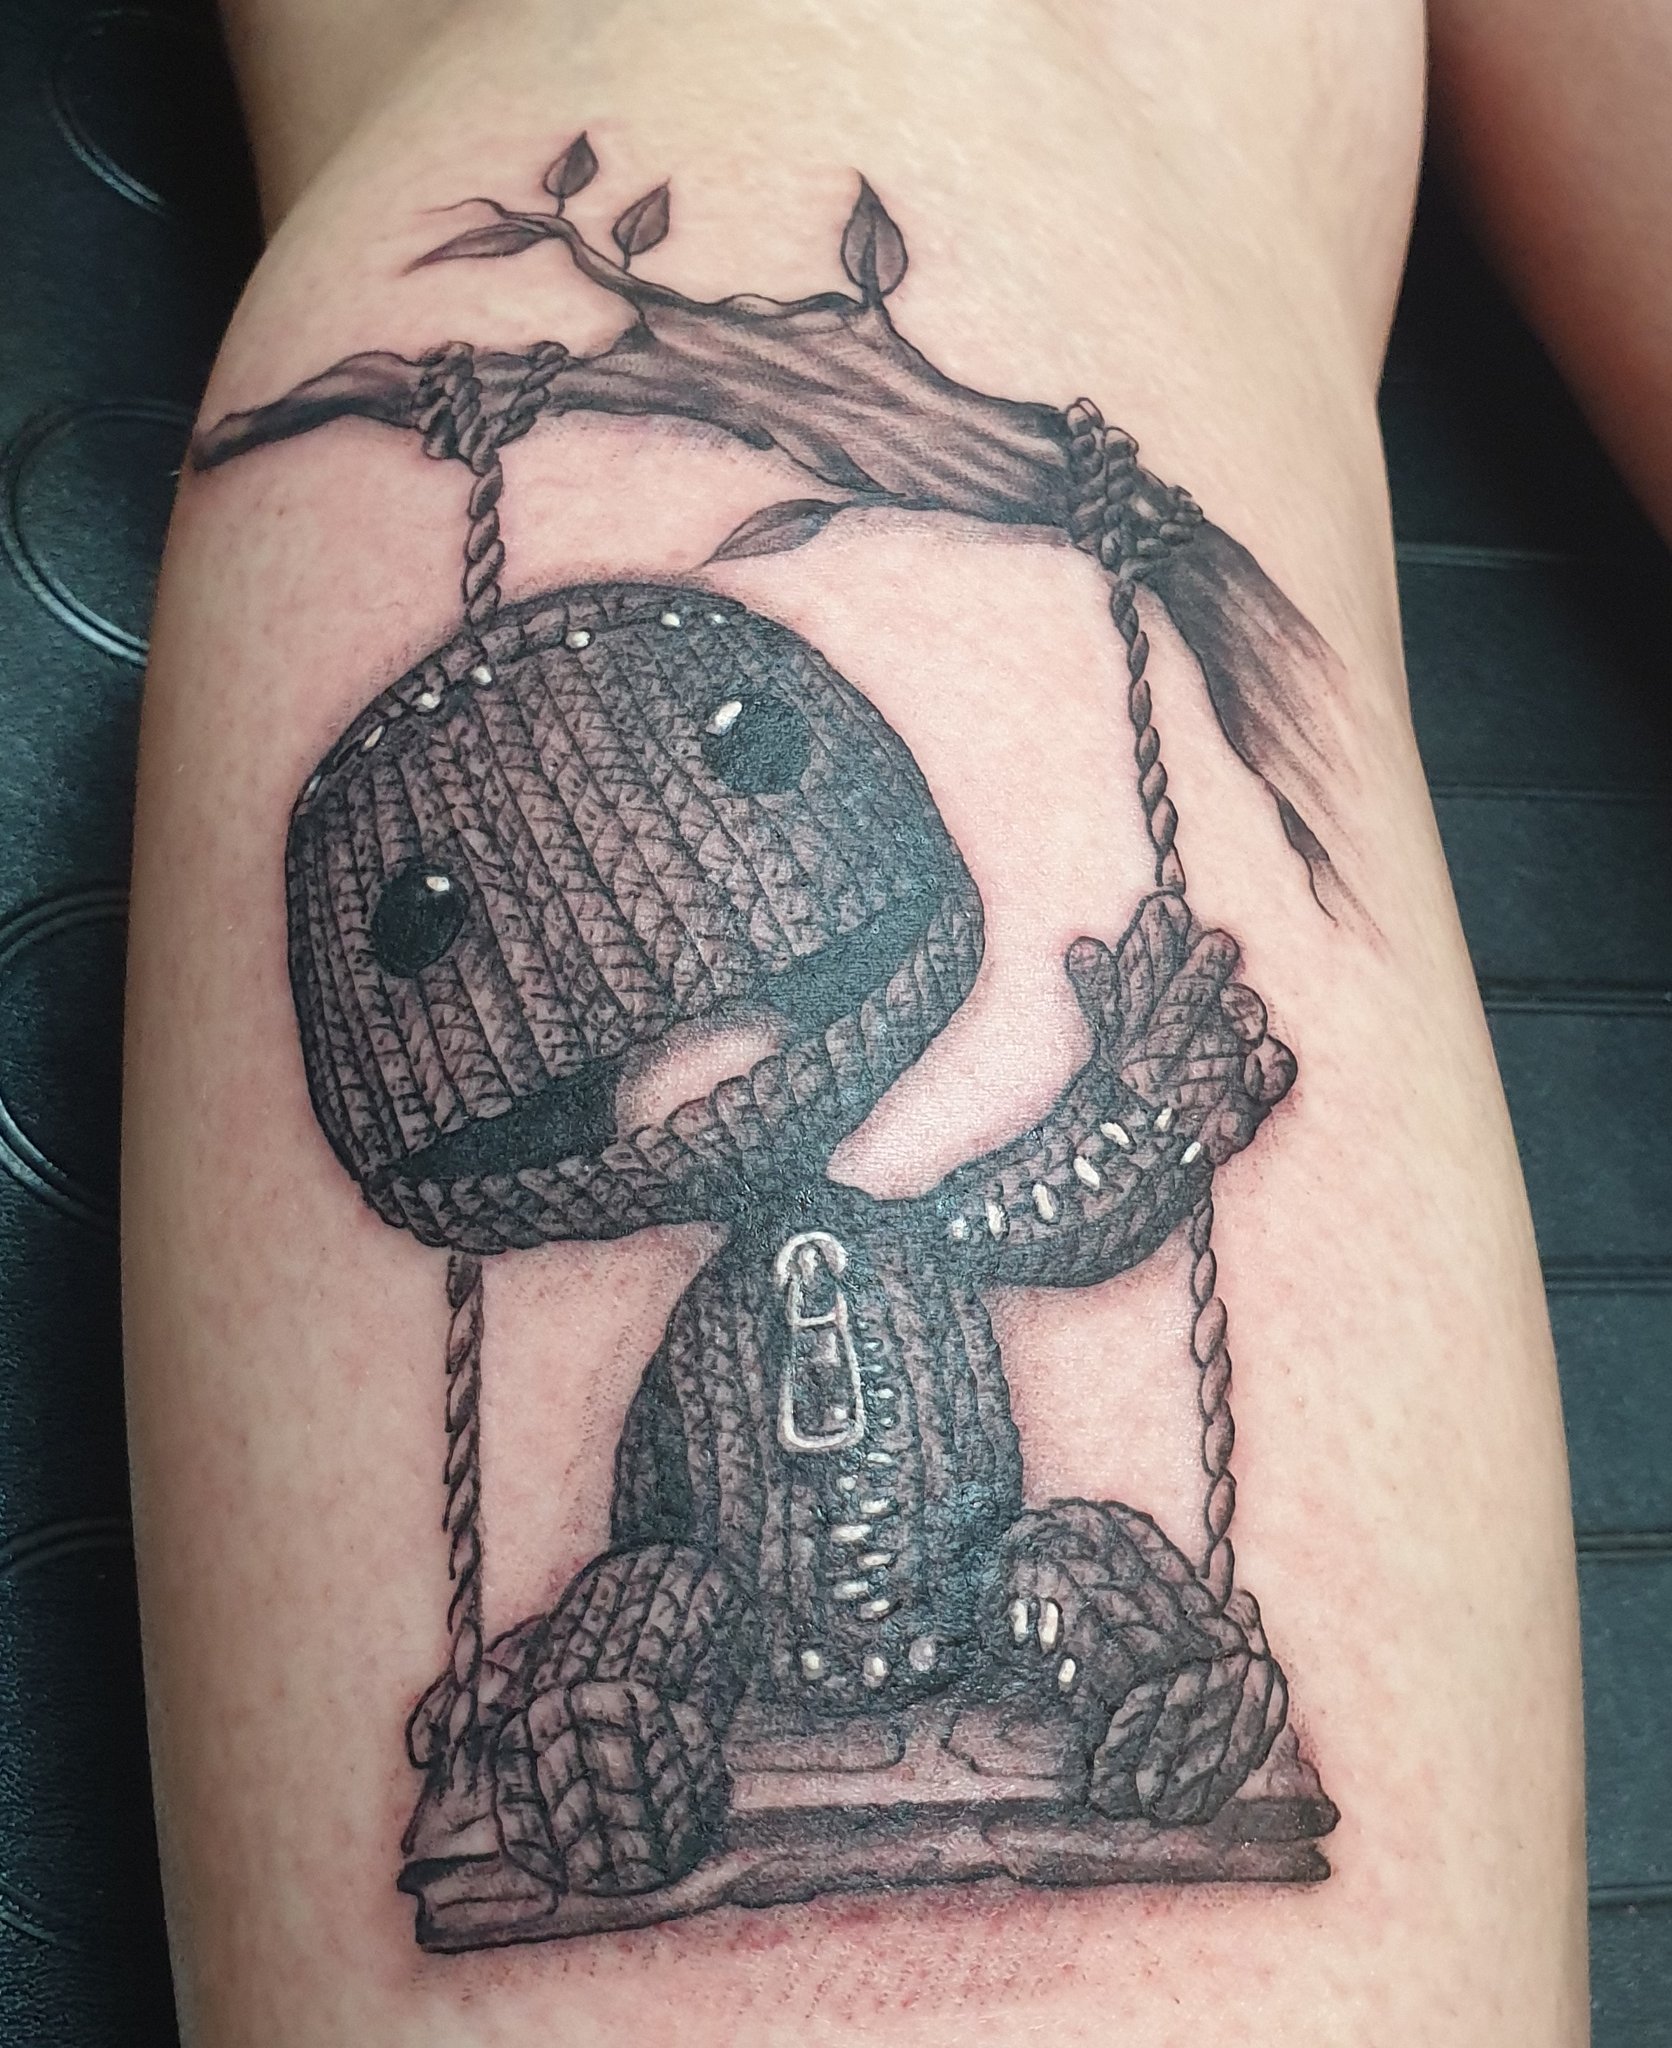 Ramón on Twitter Renato Vivoli gt LittleBigPlanet x PlayStation tattoo  ink art httpstcoTmaEPuTeGB  X